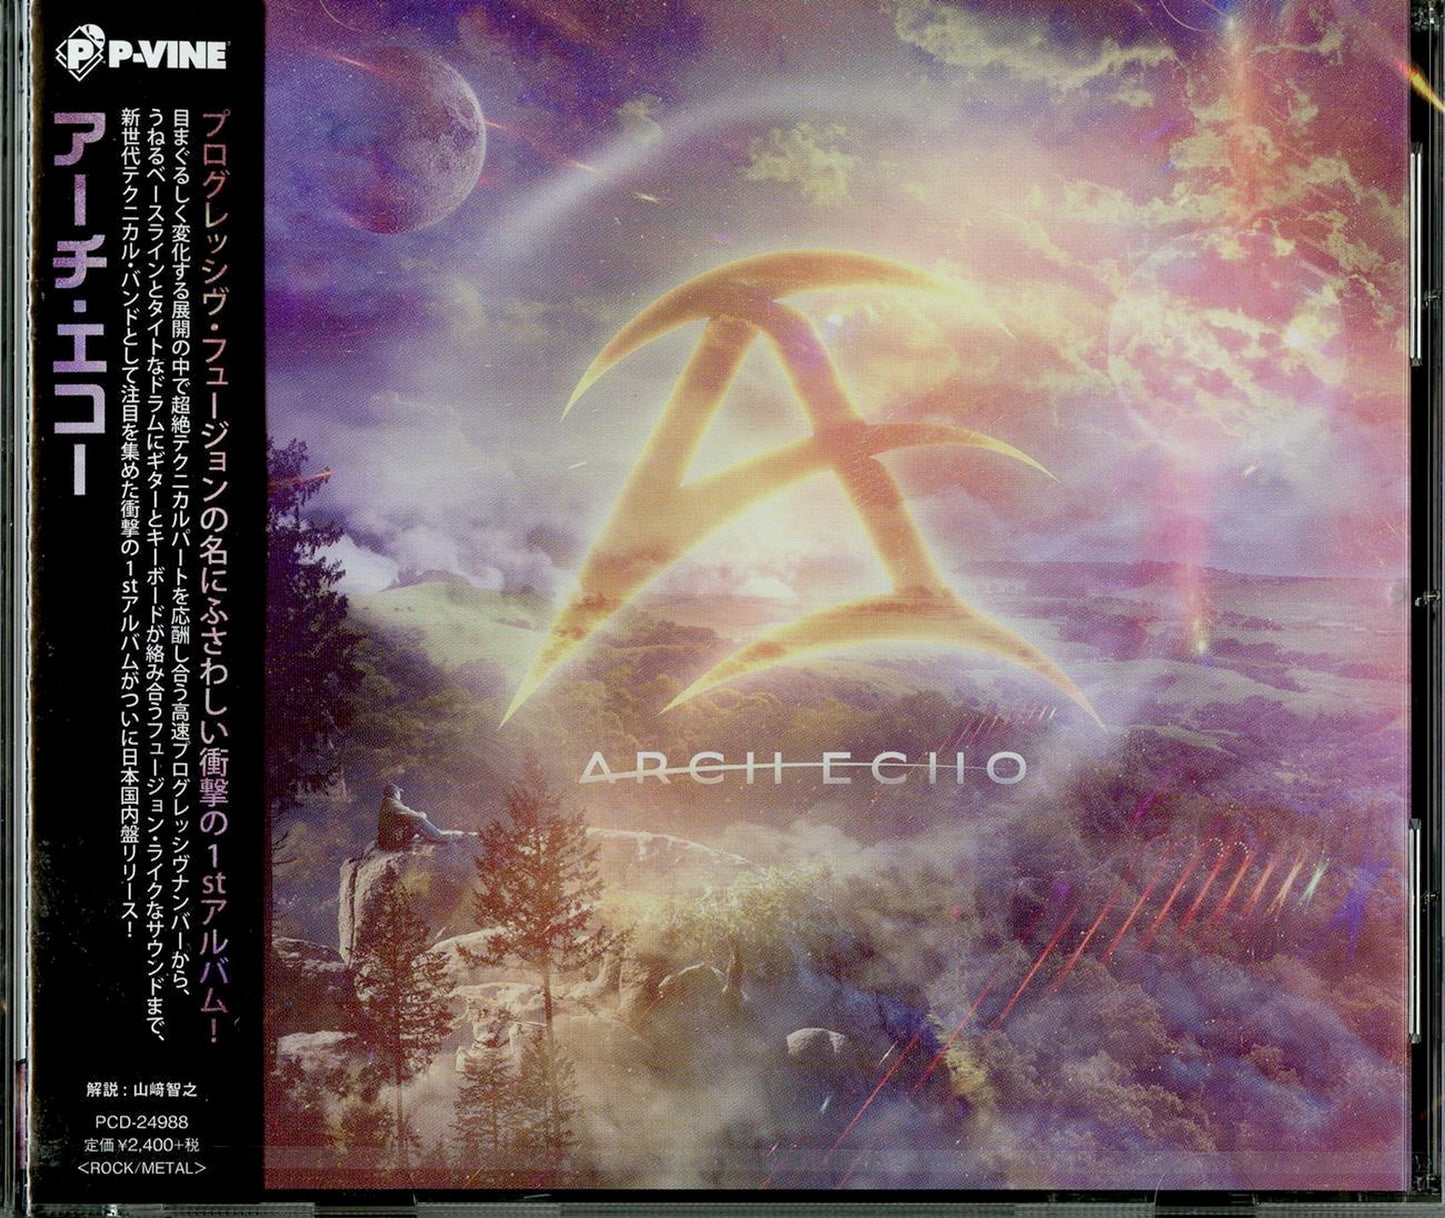 Arch Echo - S/T - Japan CD